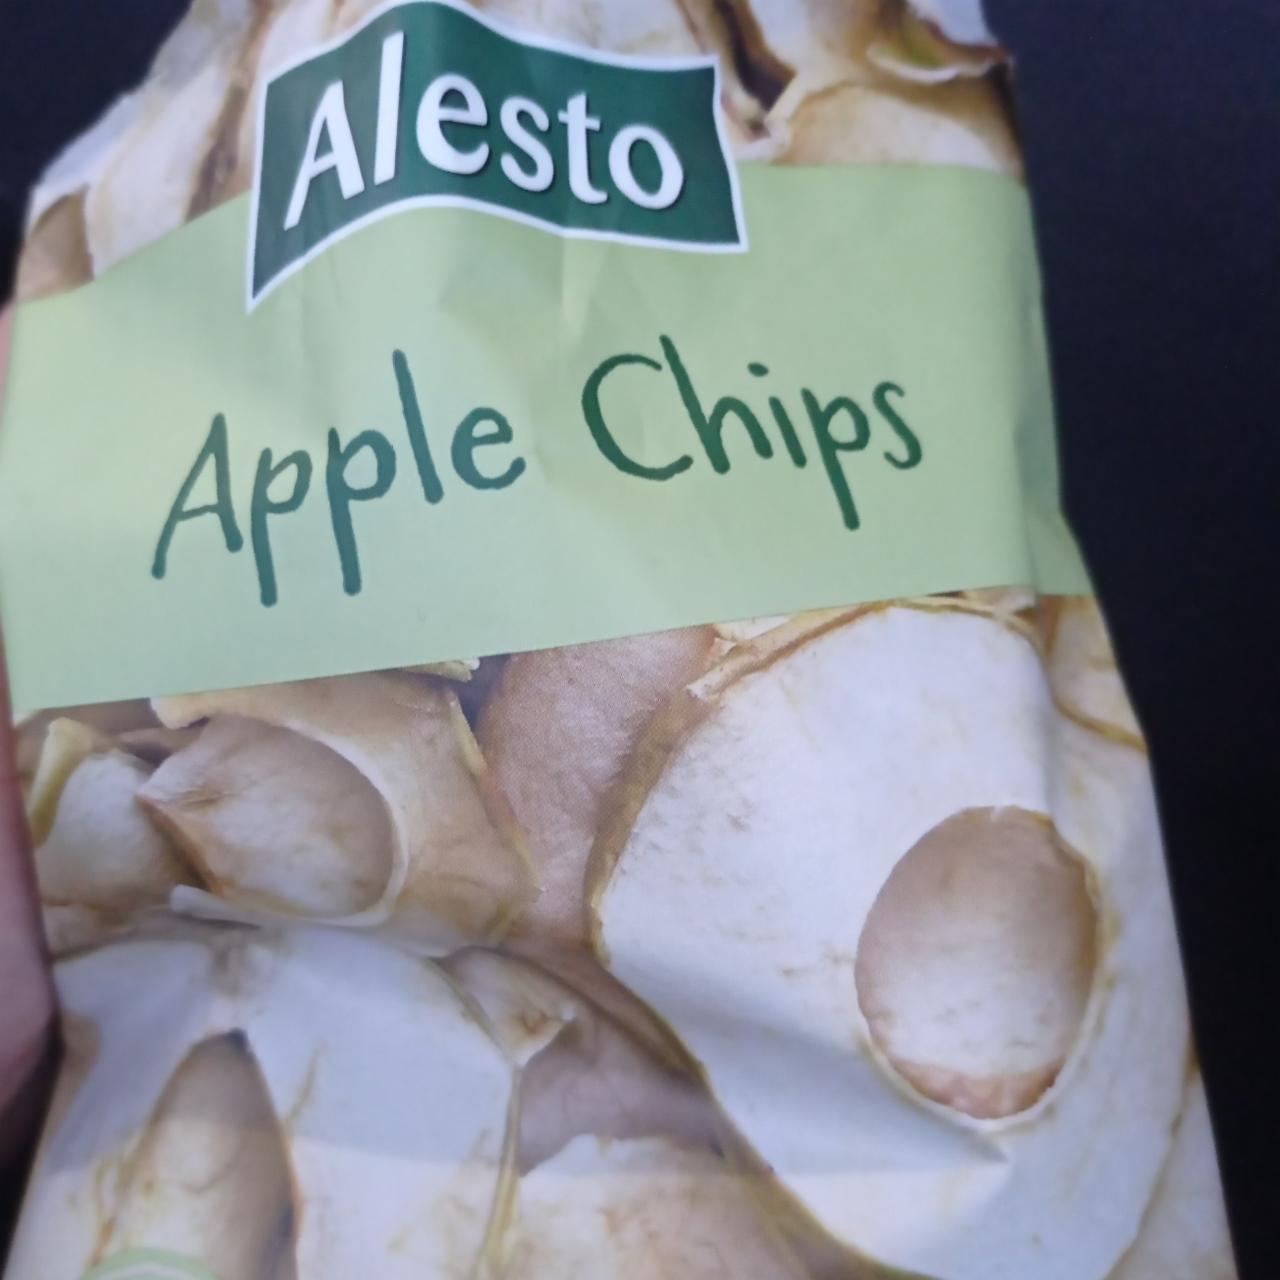 Фото - яблочные чипсы Alesto